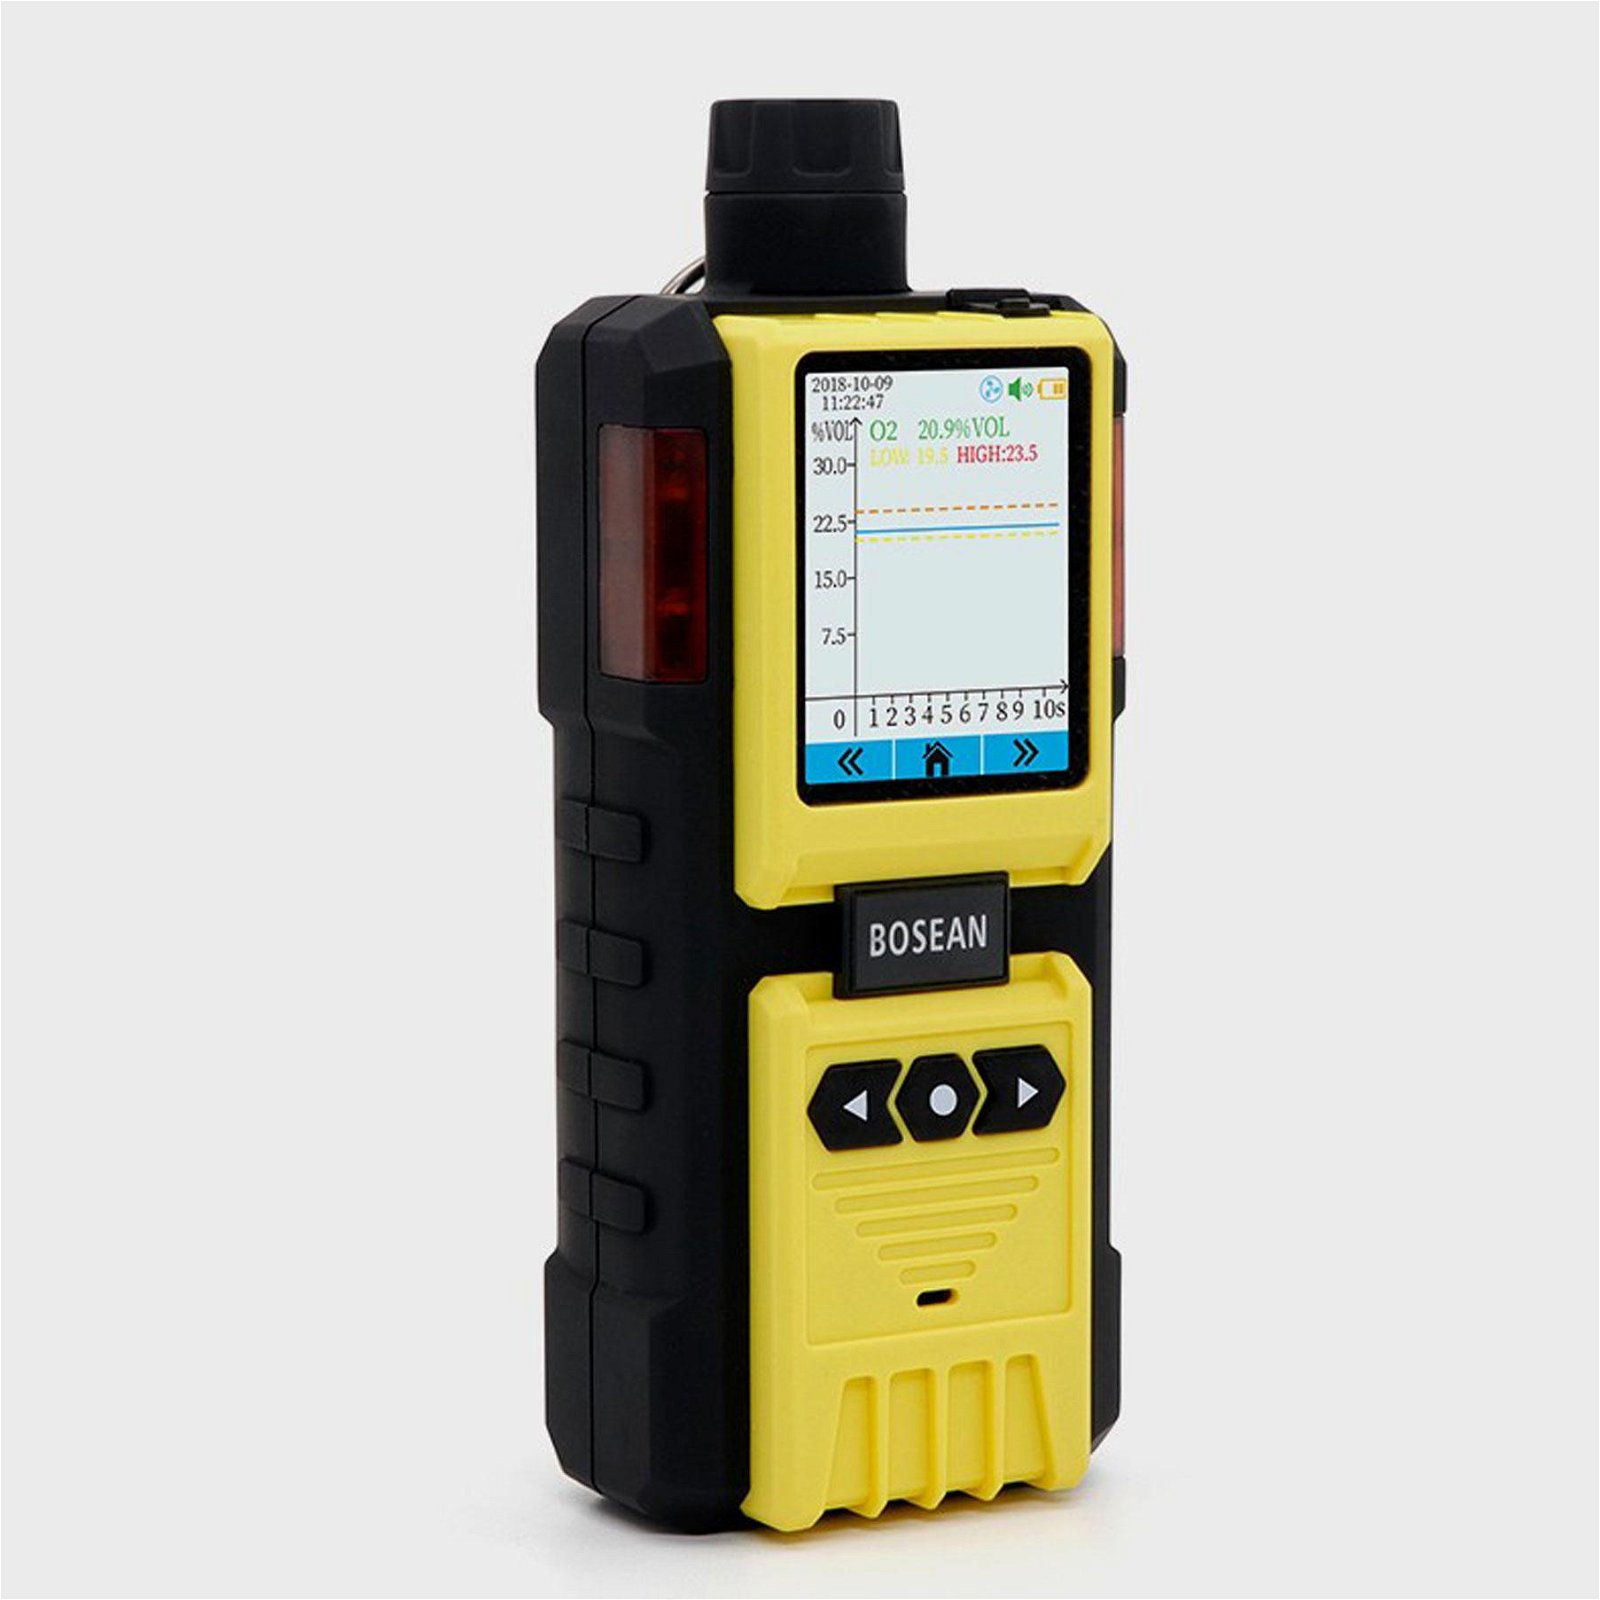 Pumping PH3 Gas Detector K-600 Phosphine Gas leak alarm Detector Monitor 1-20ppm 3